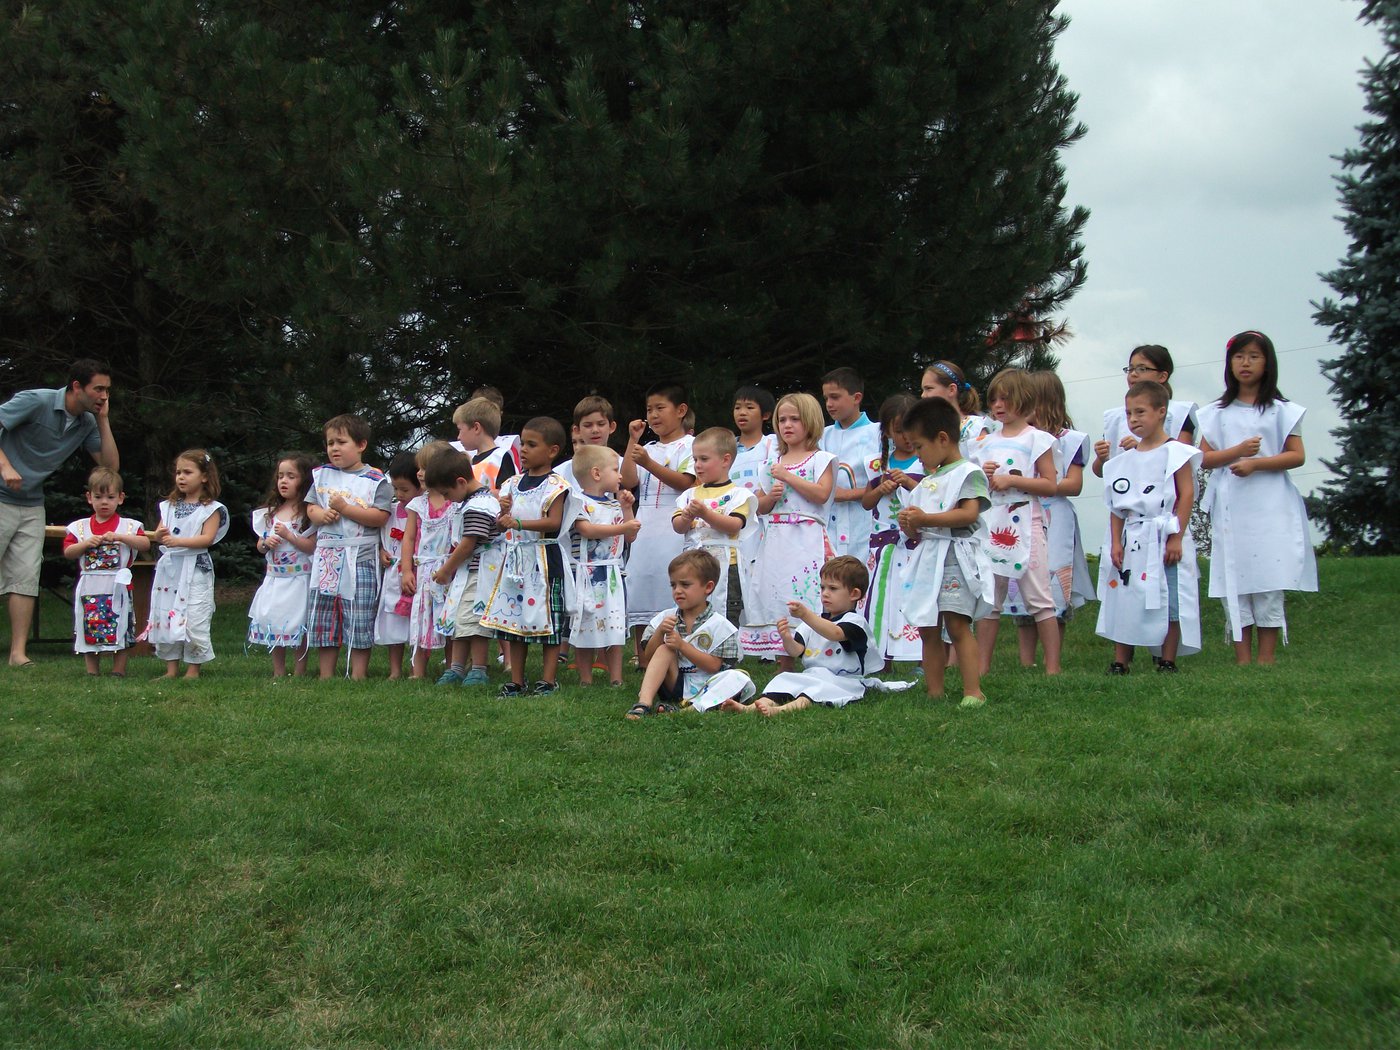 Children's Summer Bible Camp